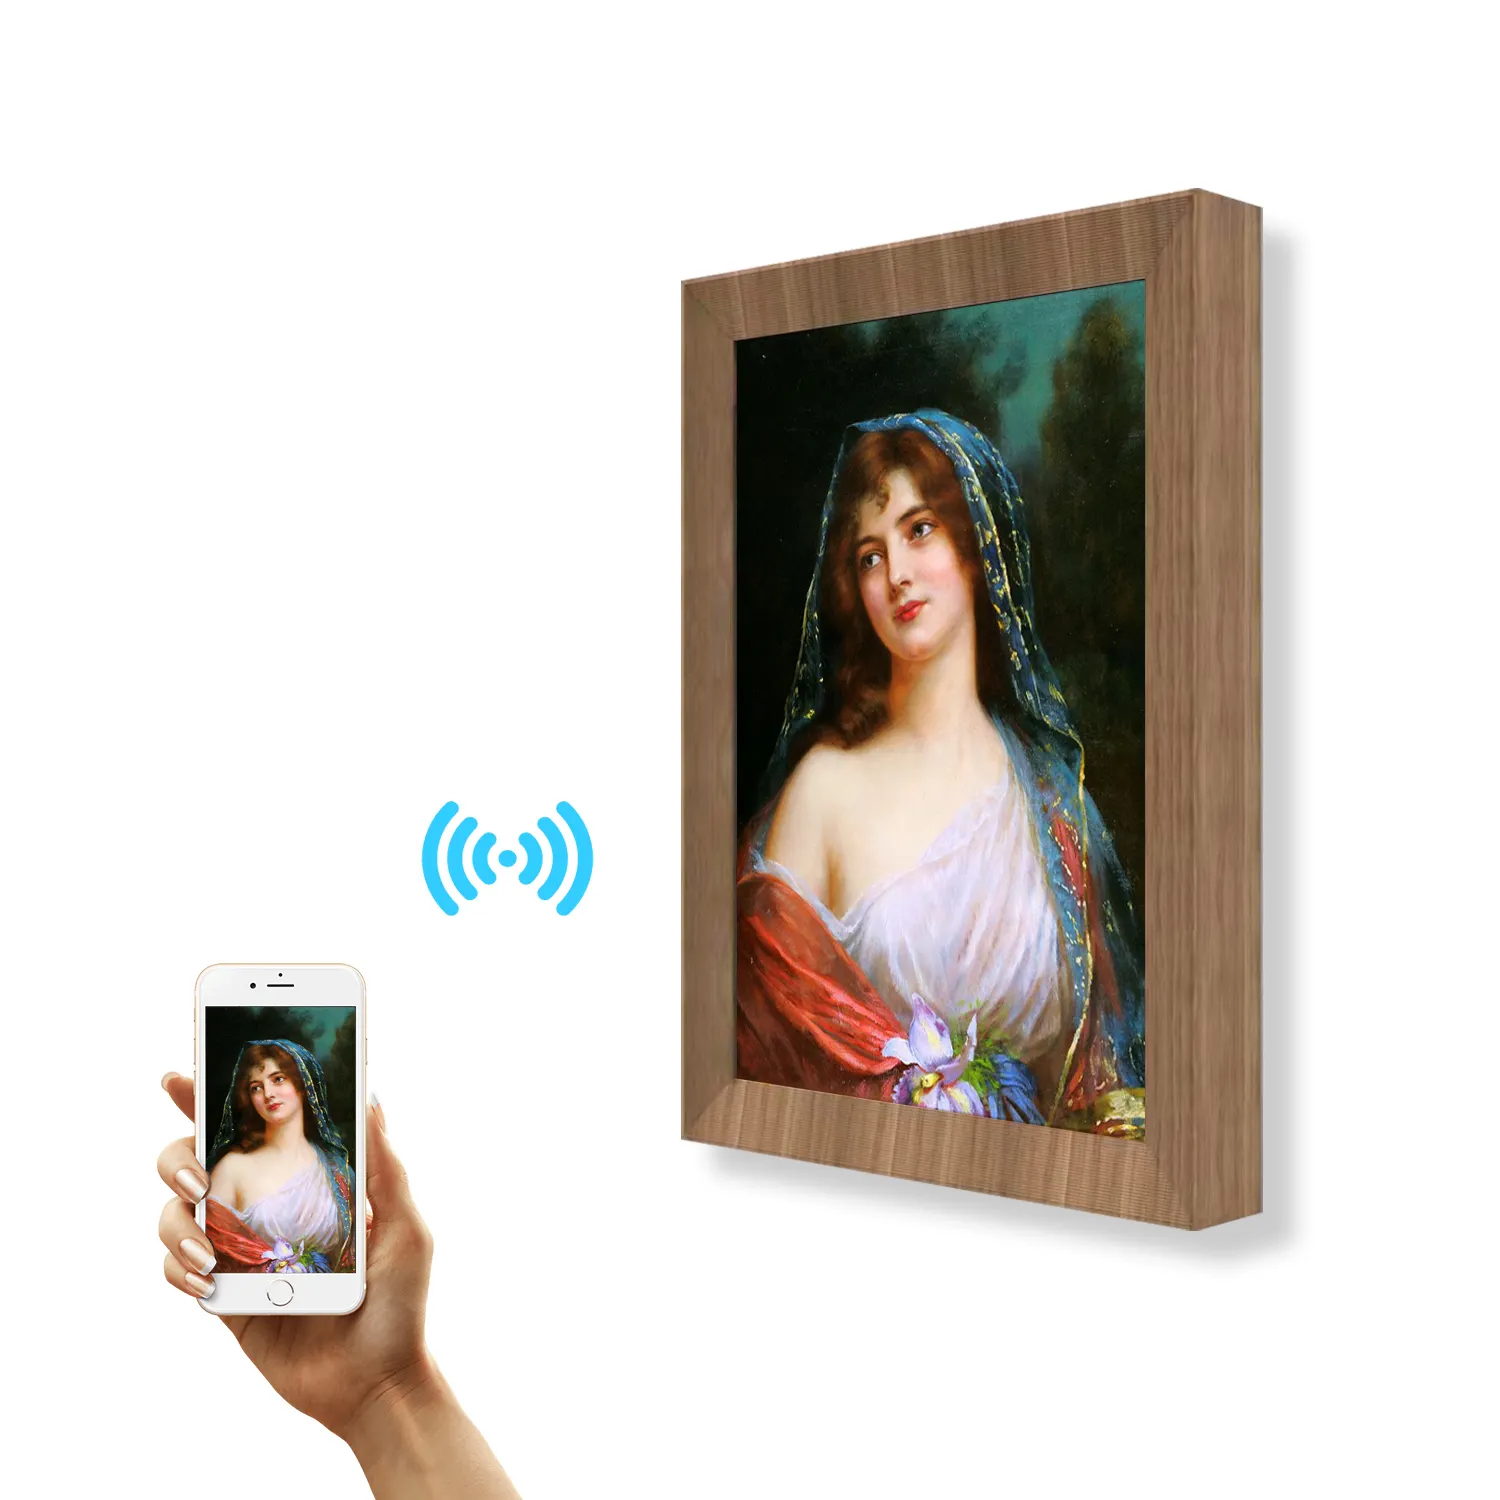 Nuovo prodotto Display Nft montaggio a parete Token Picture Wifi Share Screen 2k 4k Smart Advertising Lcd Video Nft Digital Art Frames